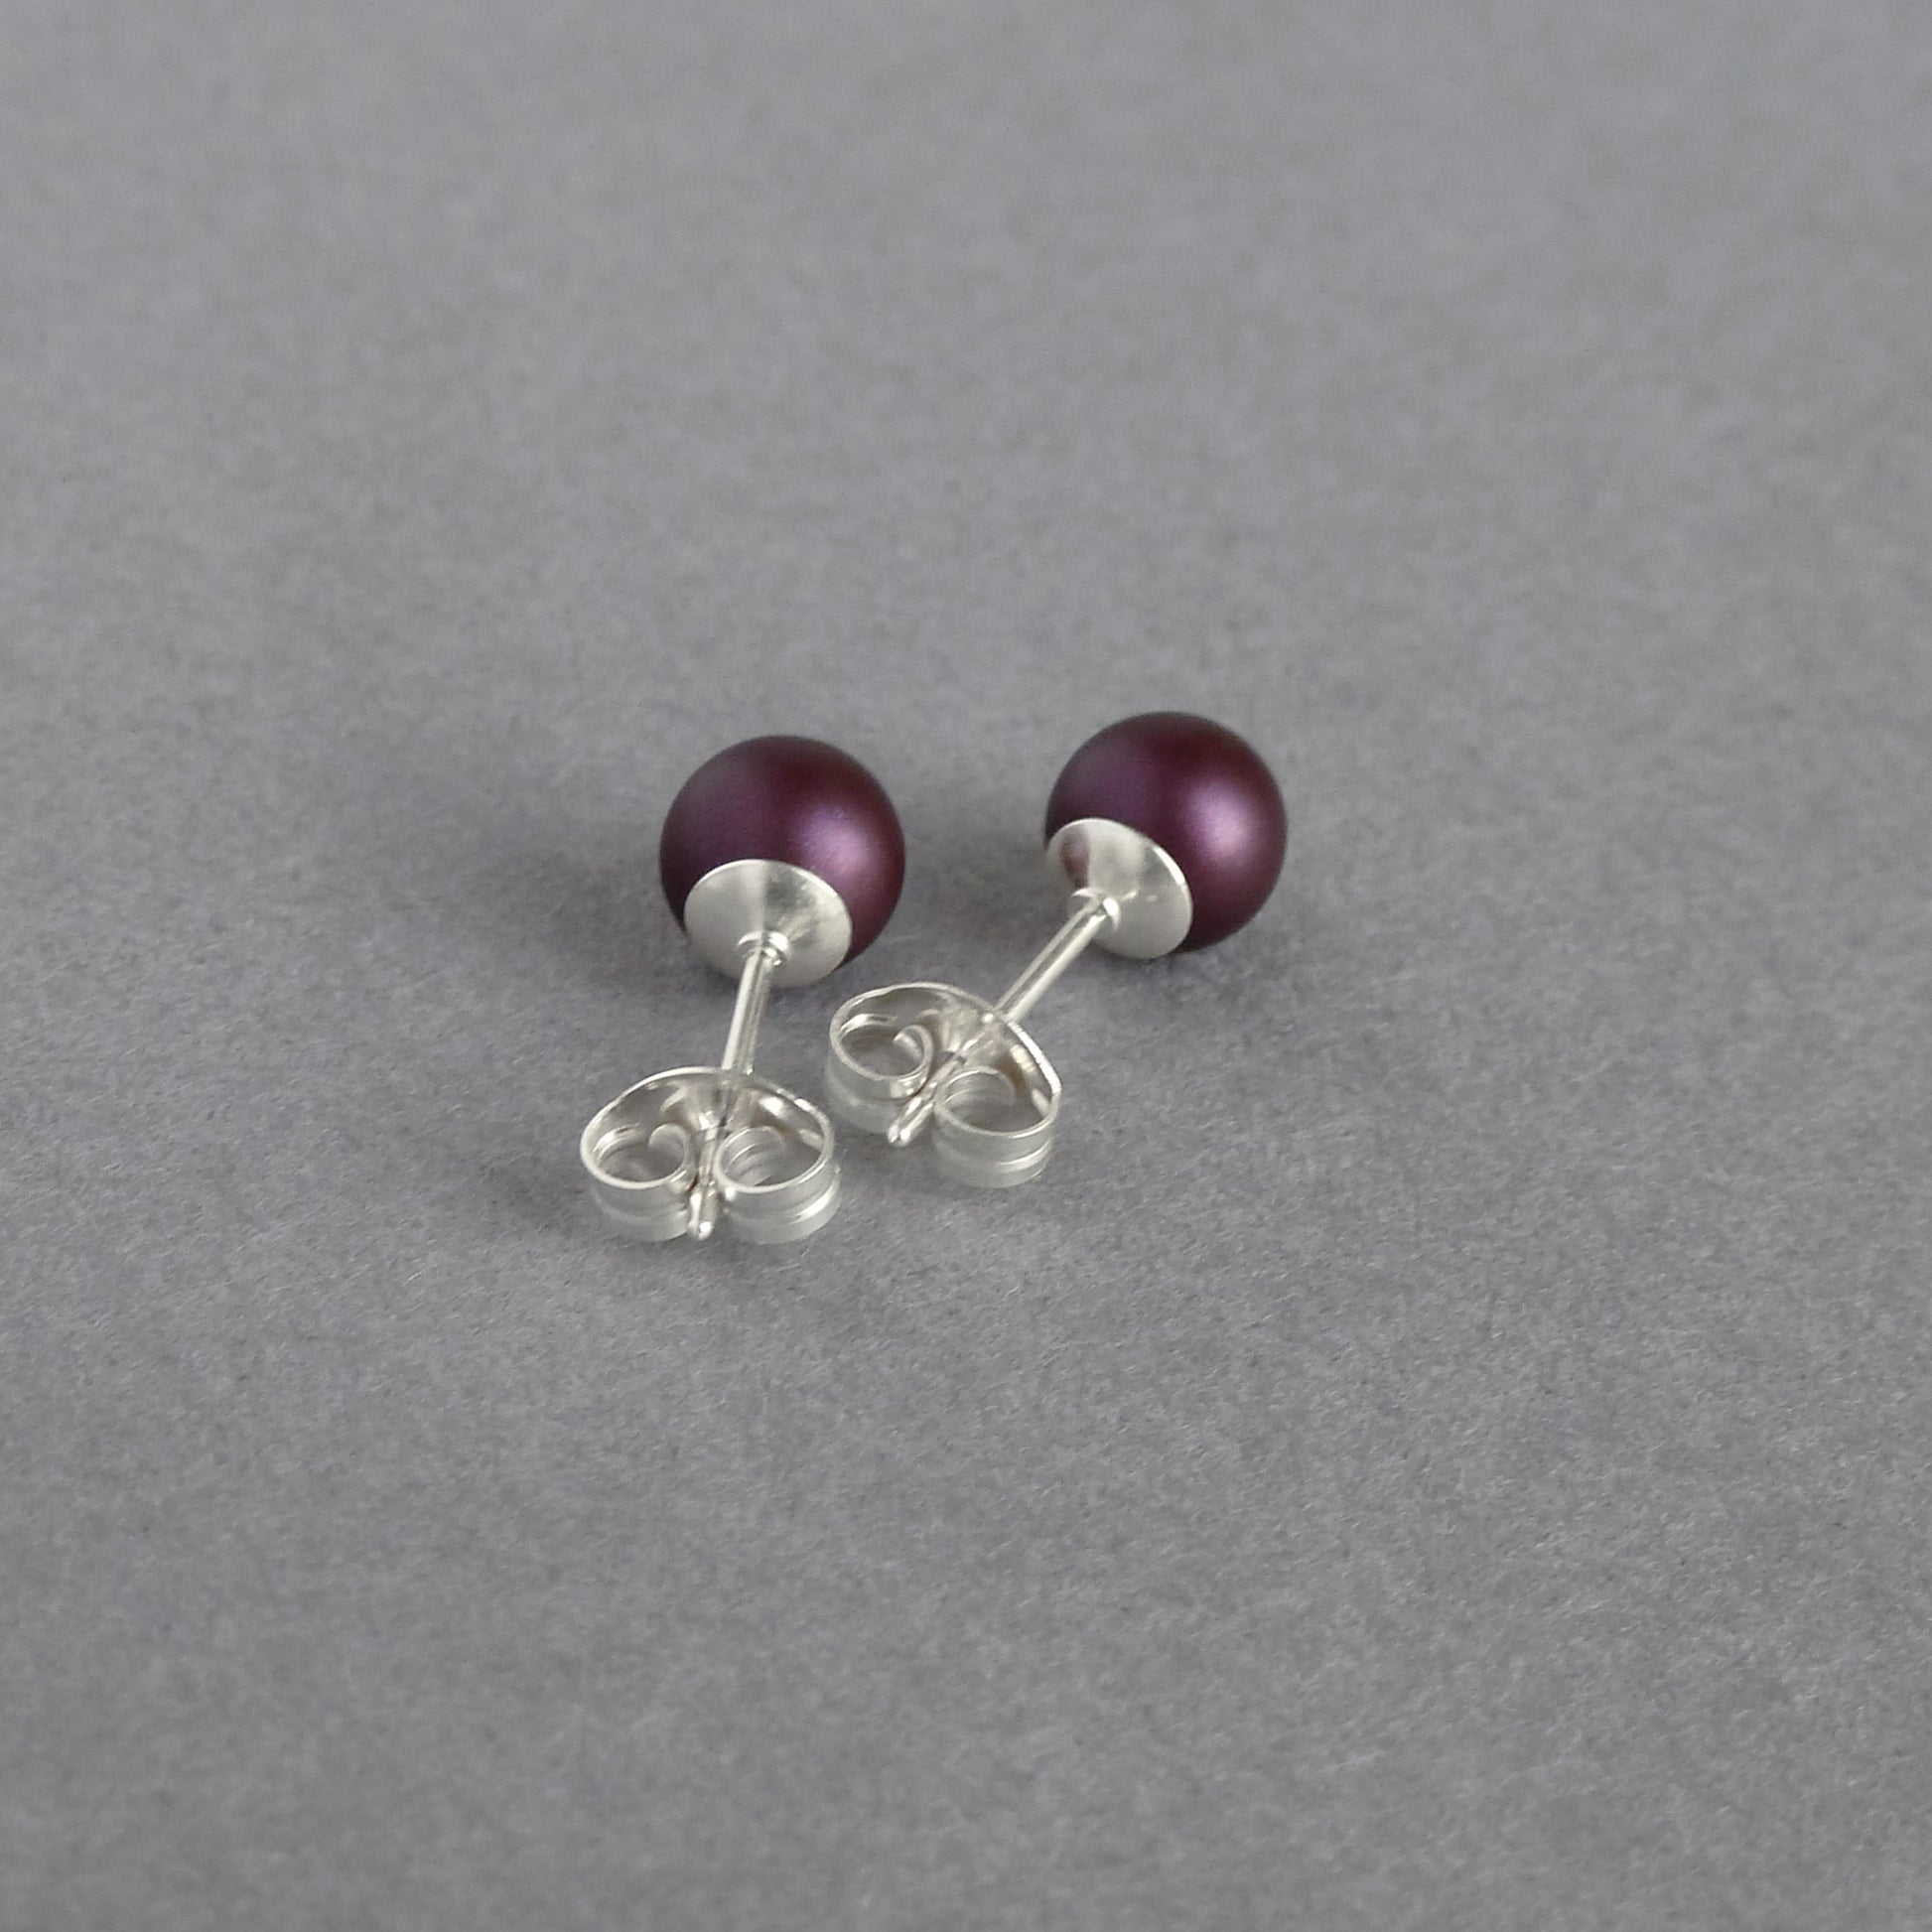 Small plum stud earrings